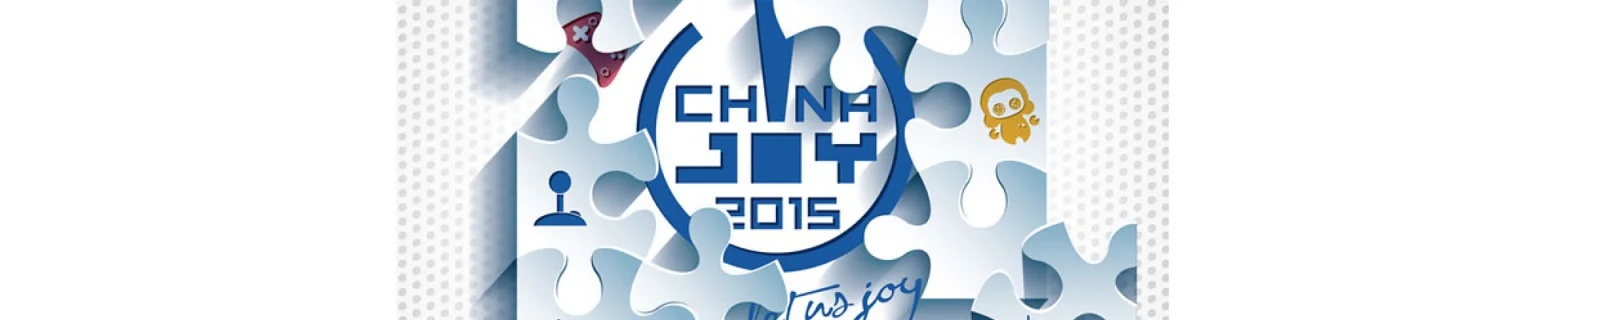 ChinaJoy2015索尼展前发布会